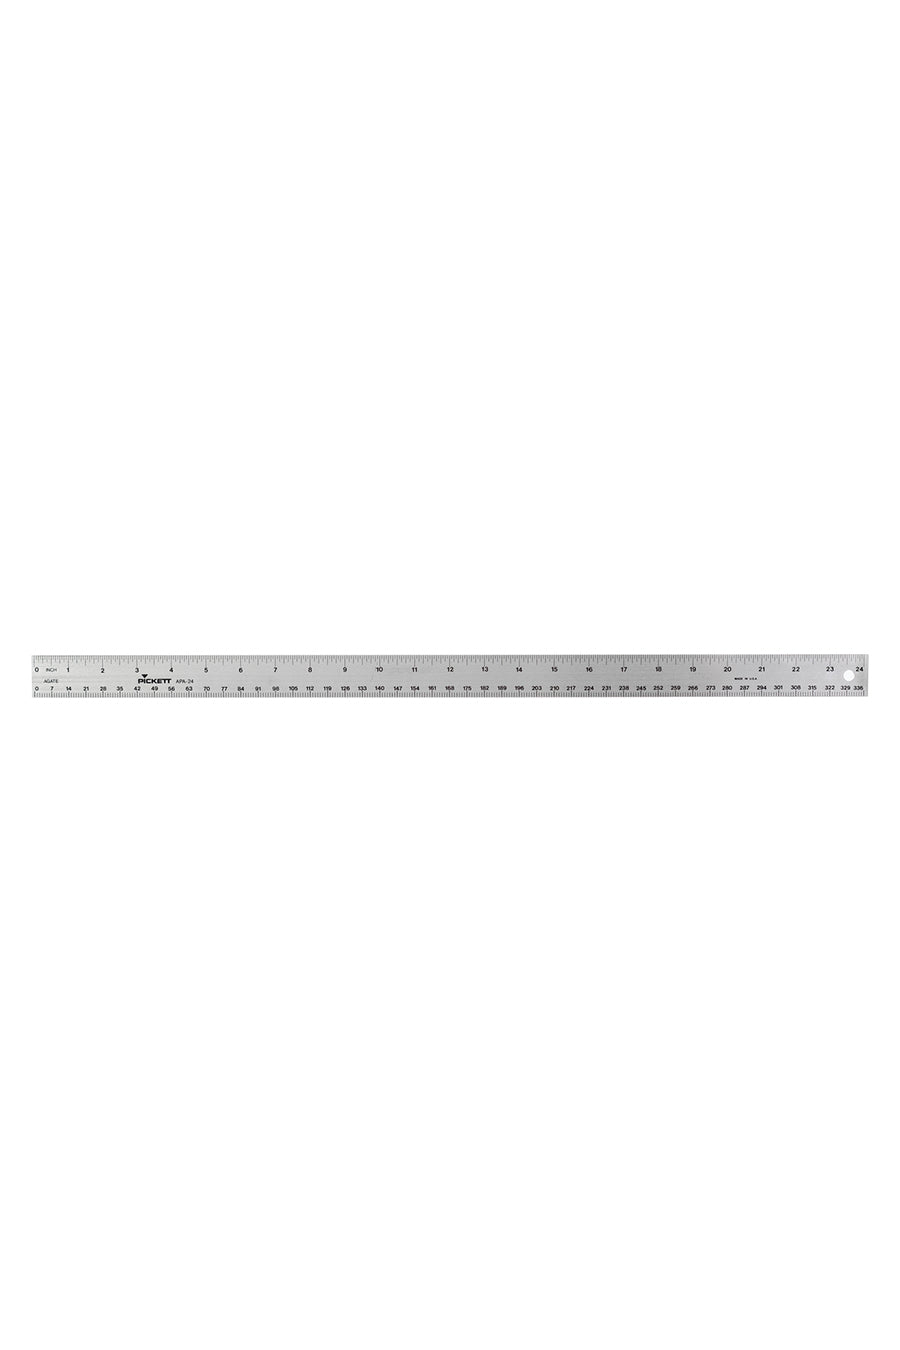 Pickett Pica/Agate Aluminum Ruler, 24" Long